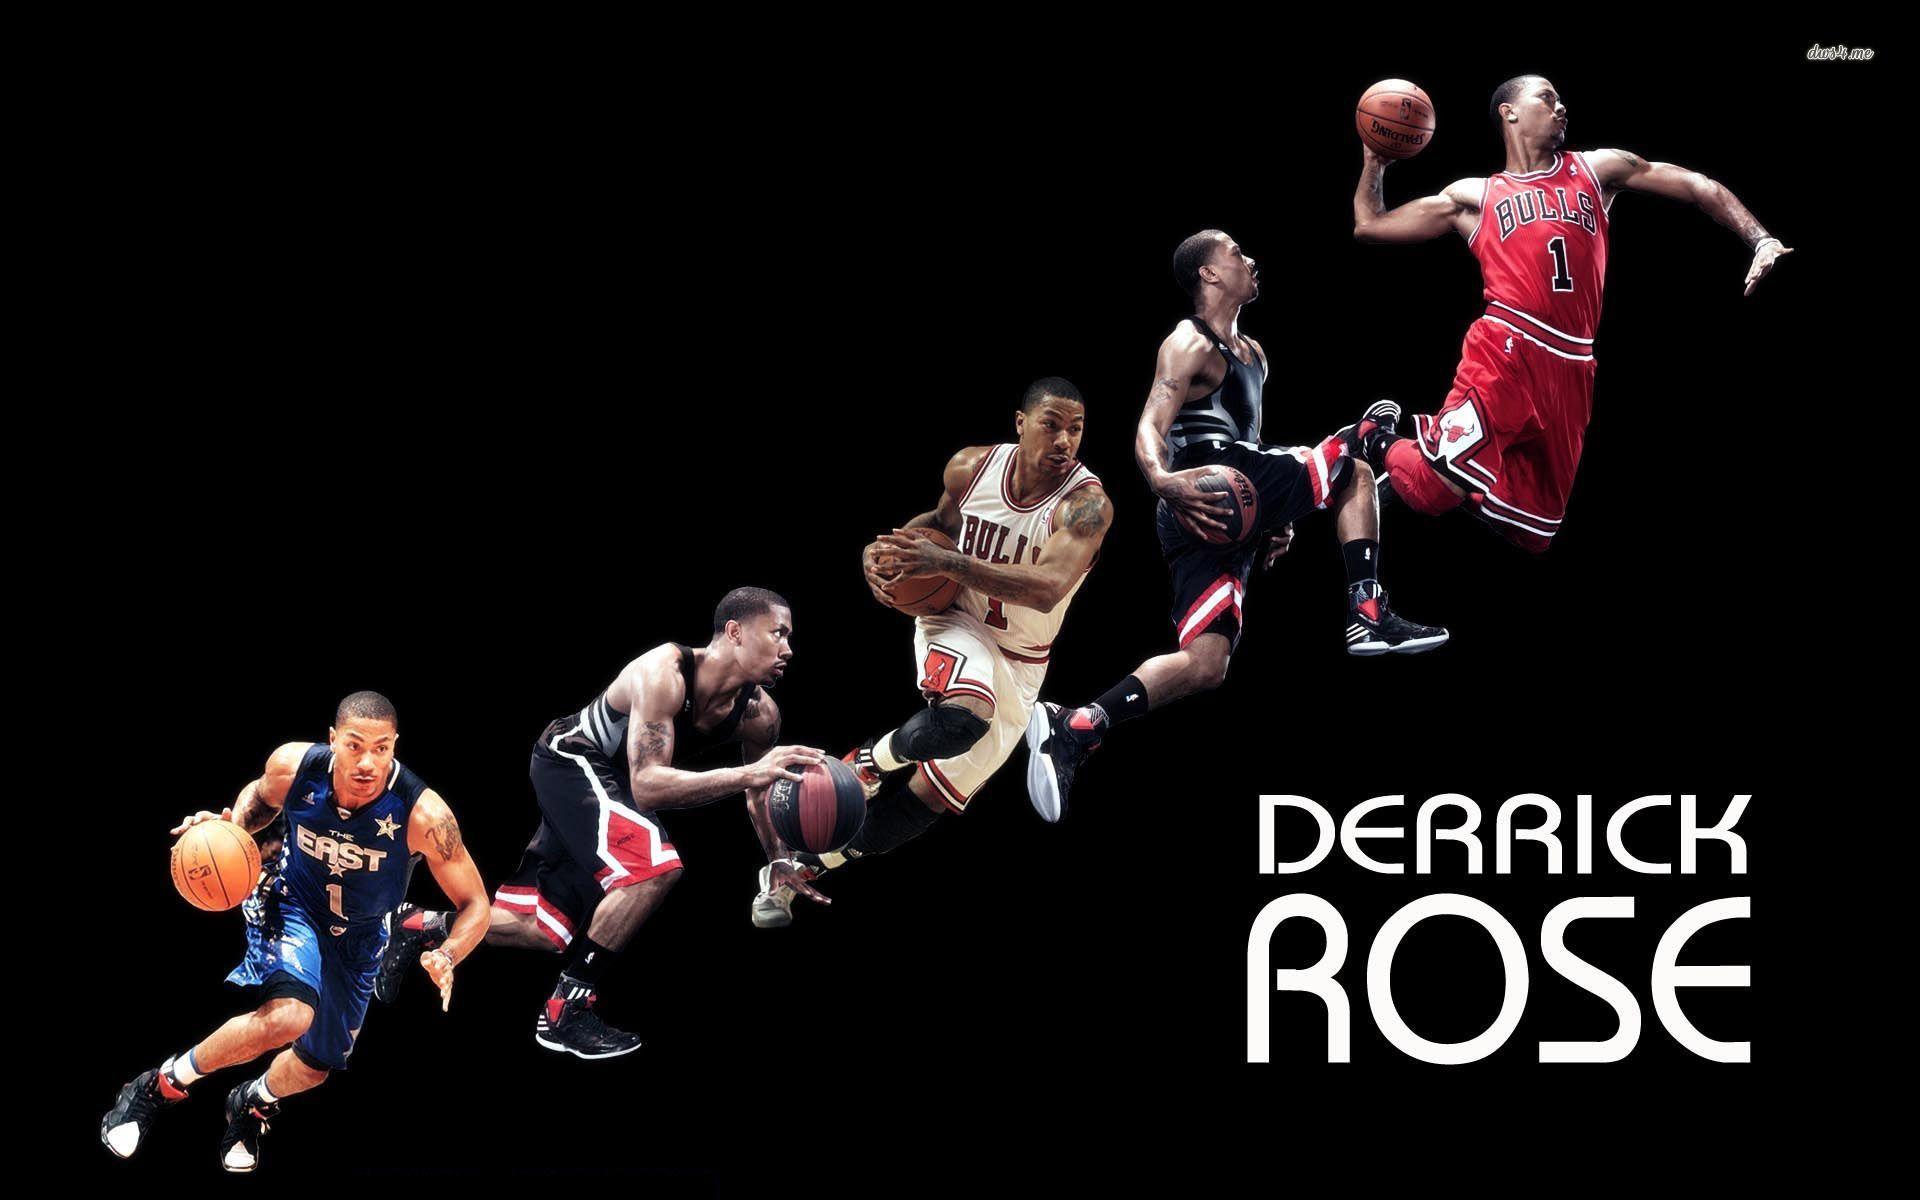 Derrick Rose HD Wallpaper 10. Derrick Rose HD Wallpaper. Derrick